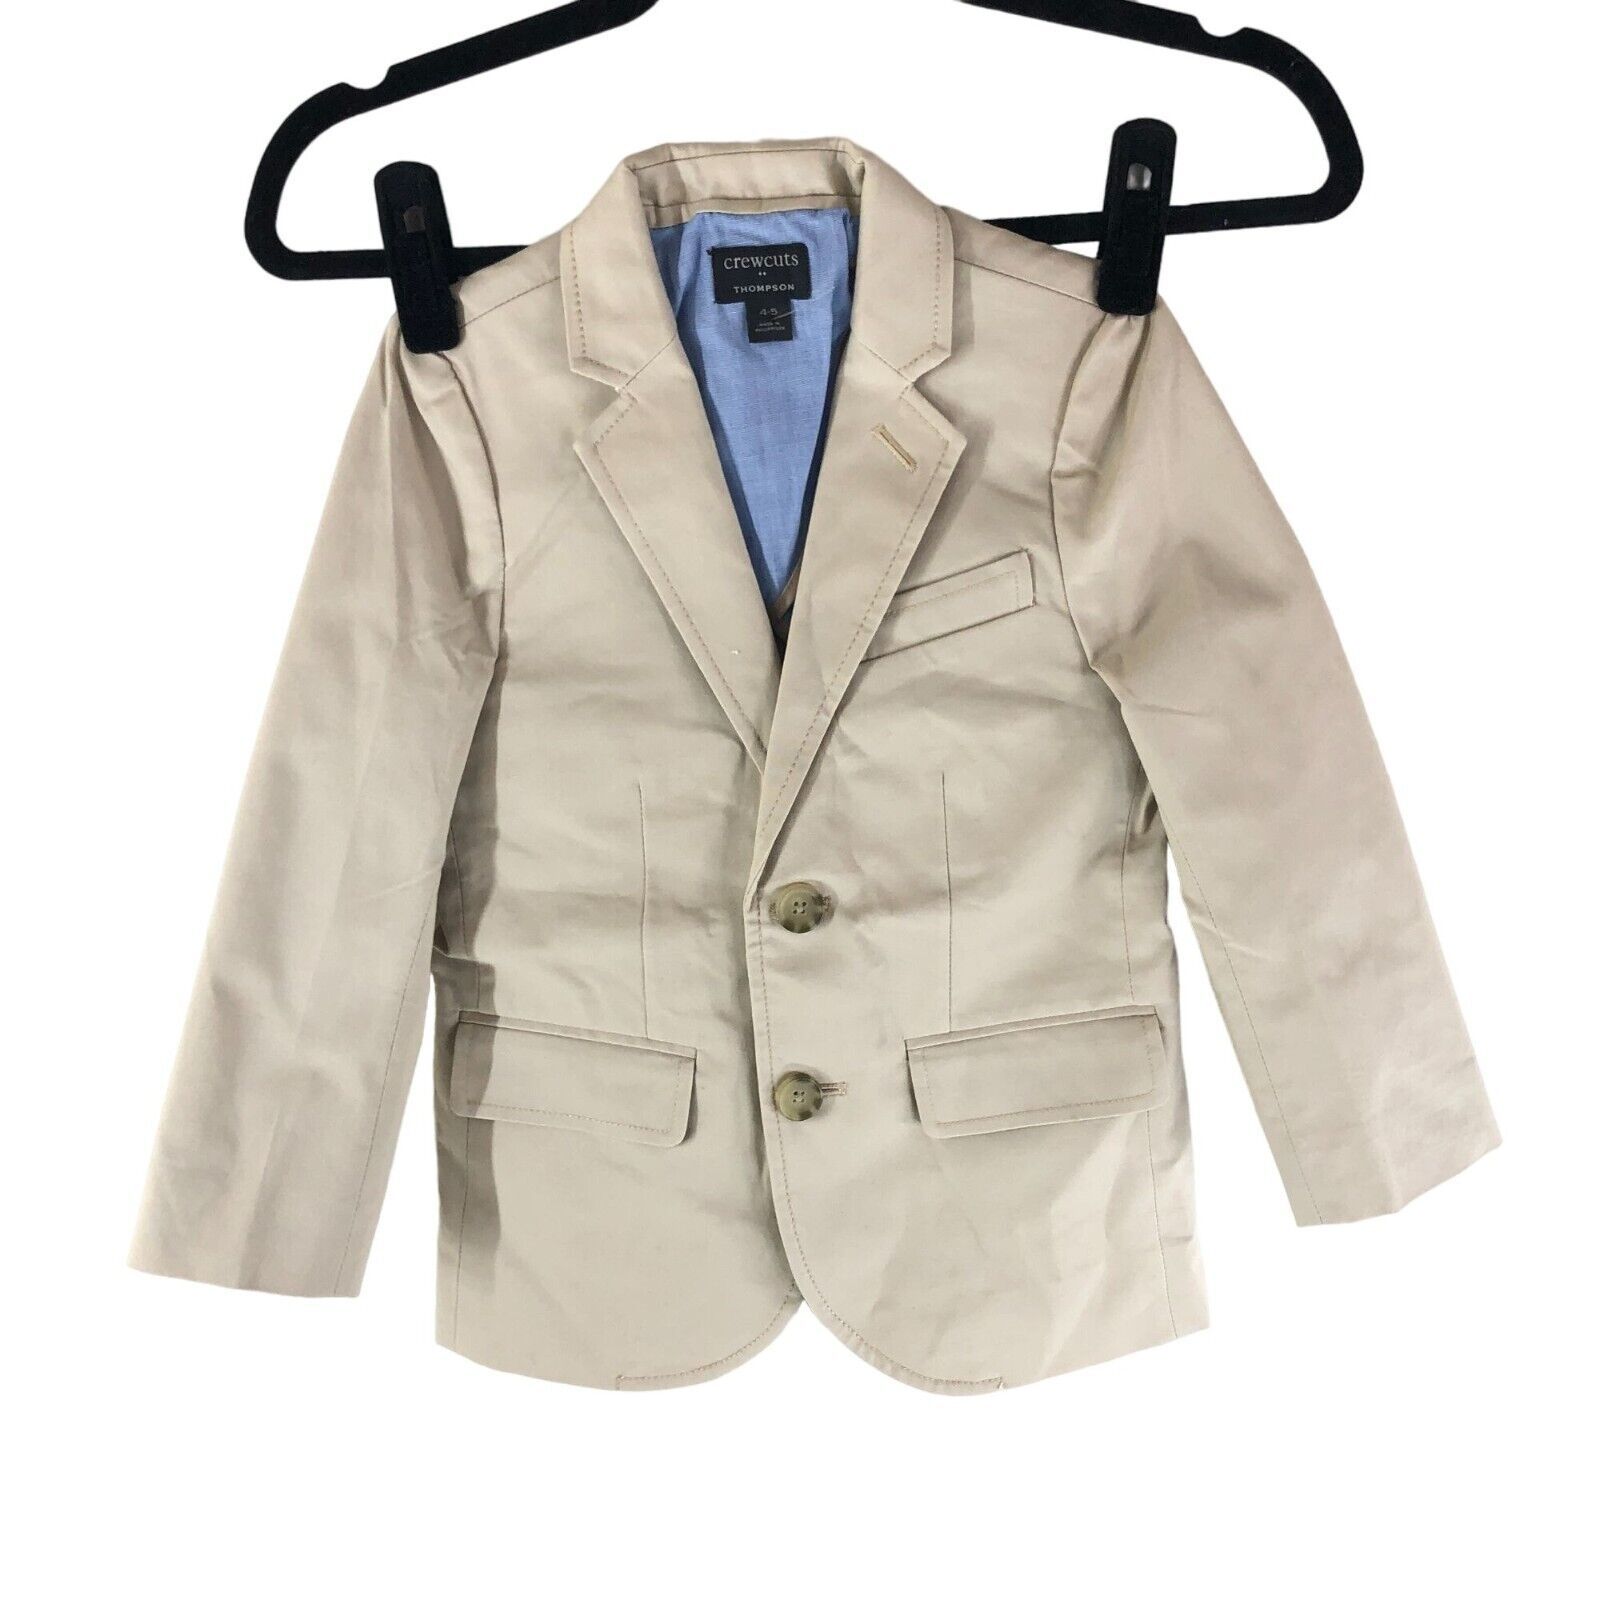 J.Crew Crewcuts Boys Thompson Suit Jacket In Flex Chino Sandy Dune Beige 4-5 - $33.73